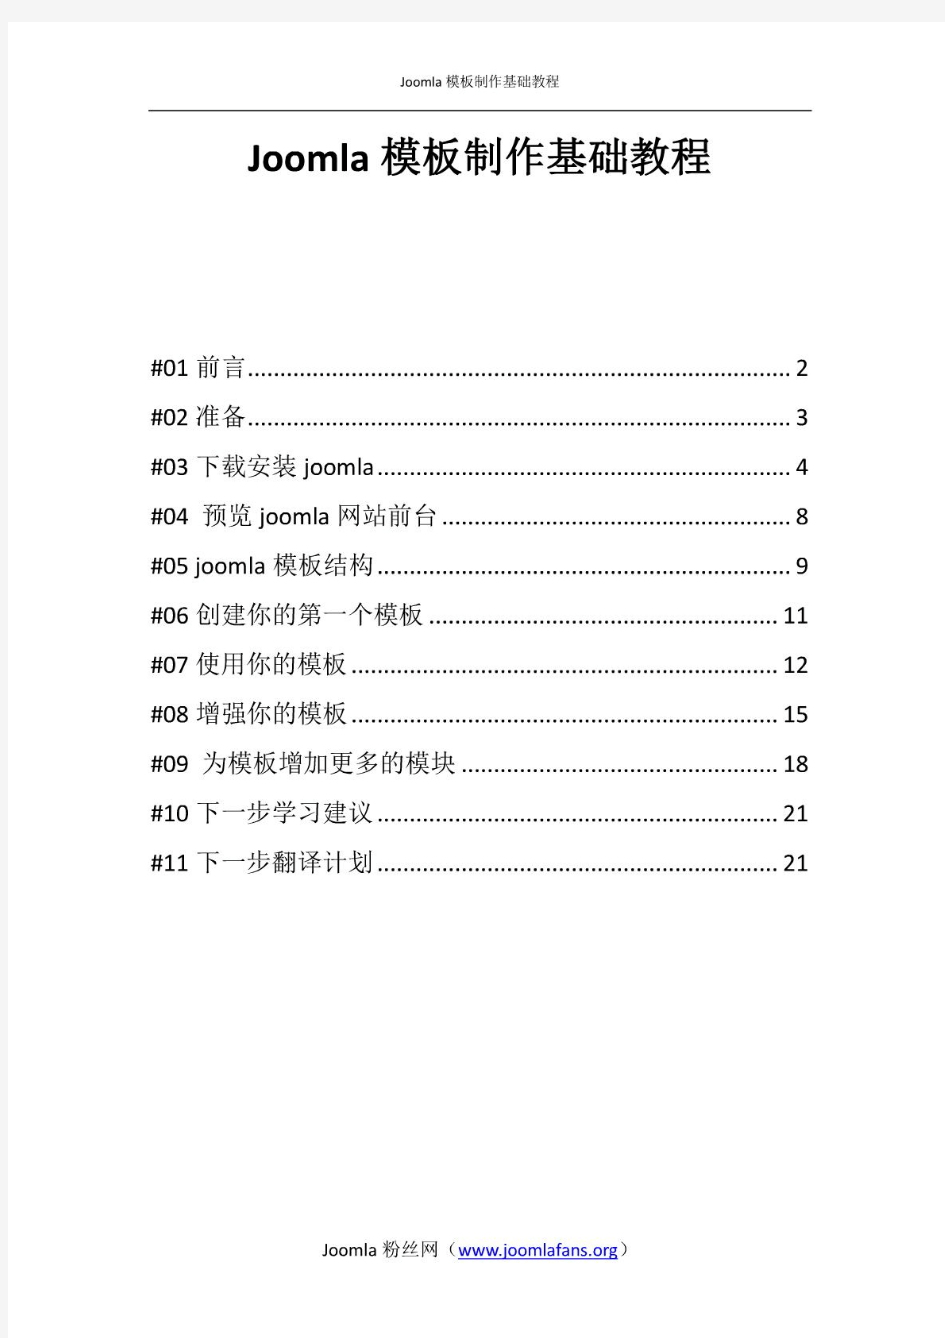 Joomla模板制作基础教程-中文版_IT168文库